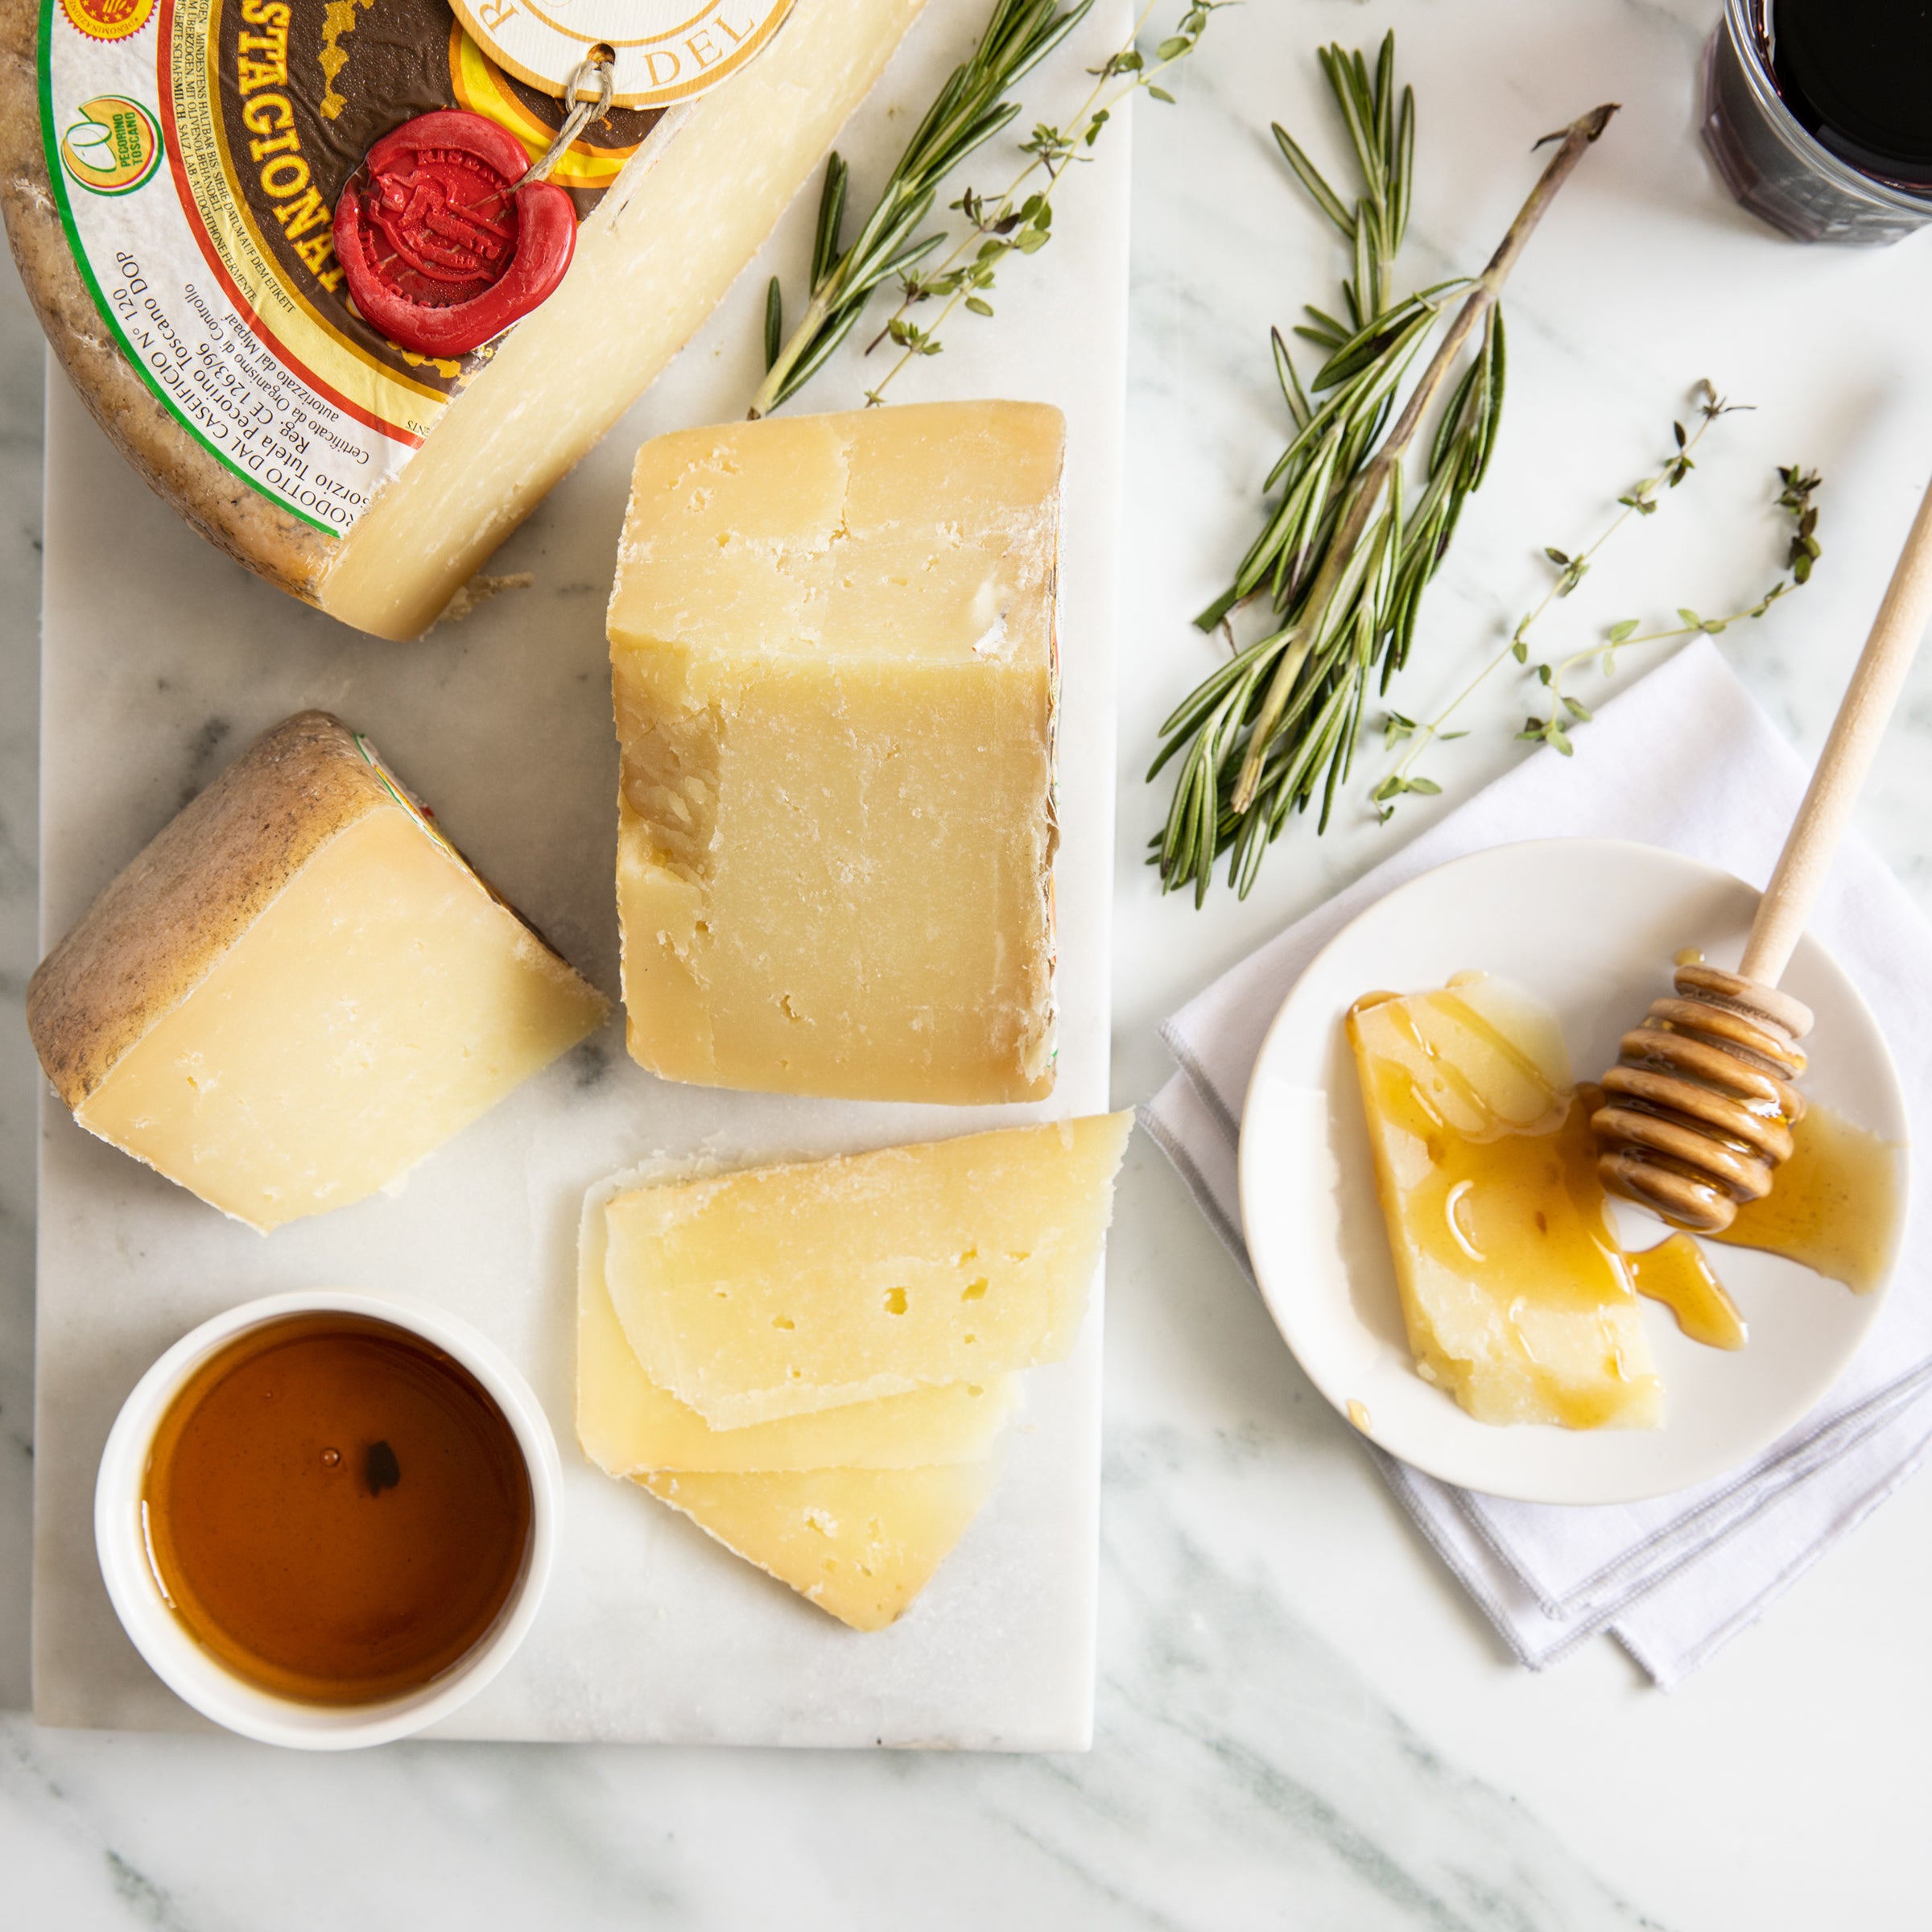 Pecorino Oro Antico Riserva Cheese_Cut & Wrapped by igourmet_Cheese